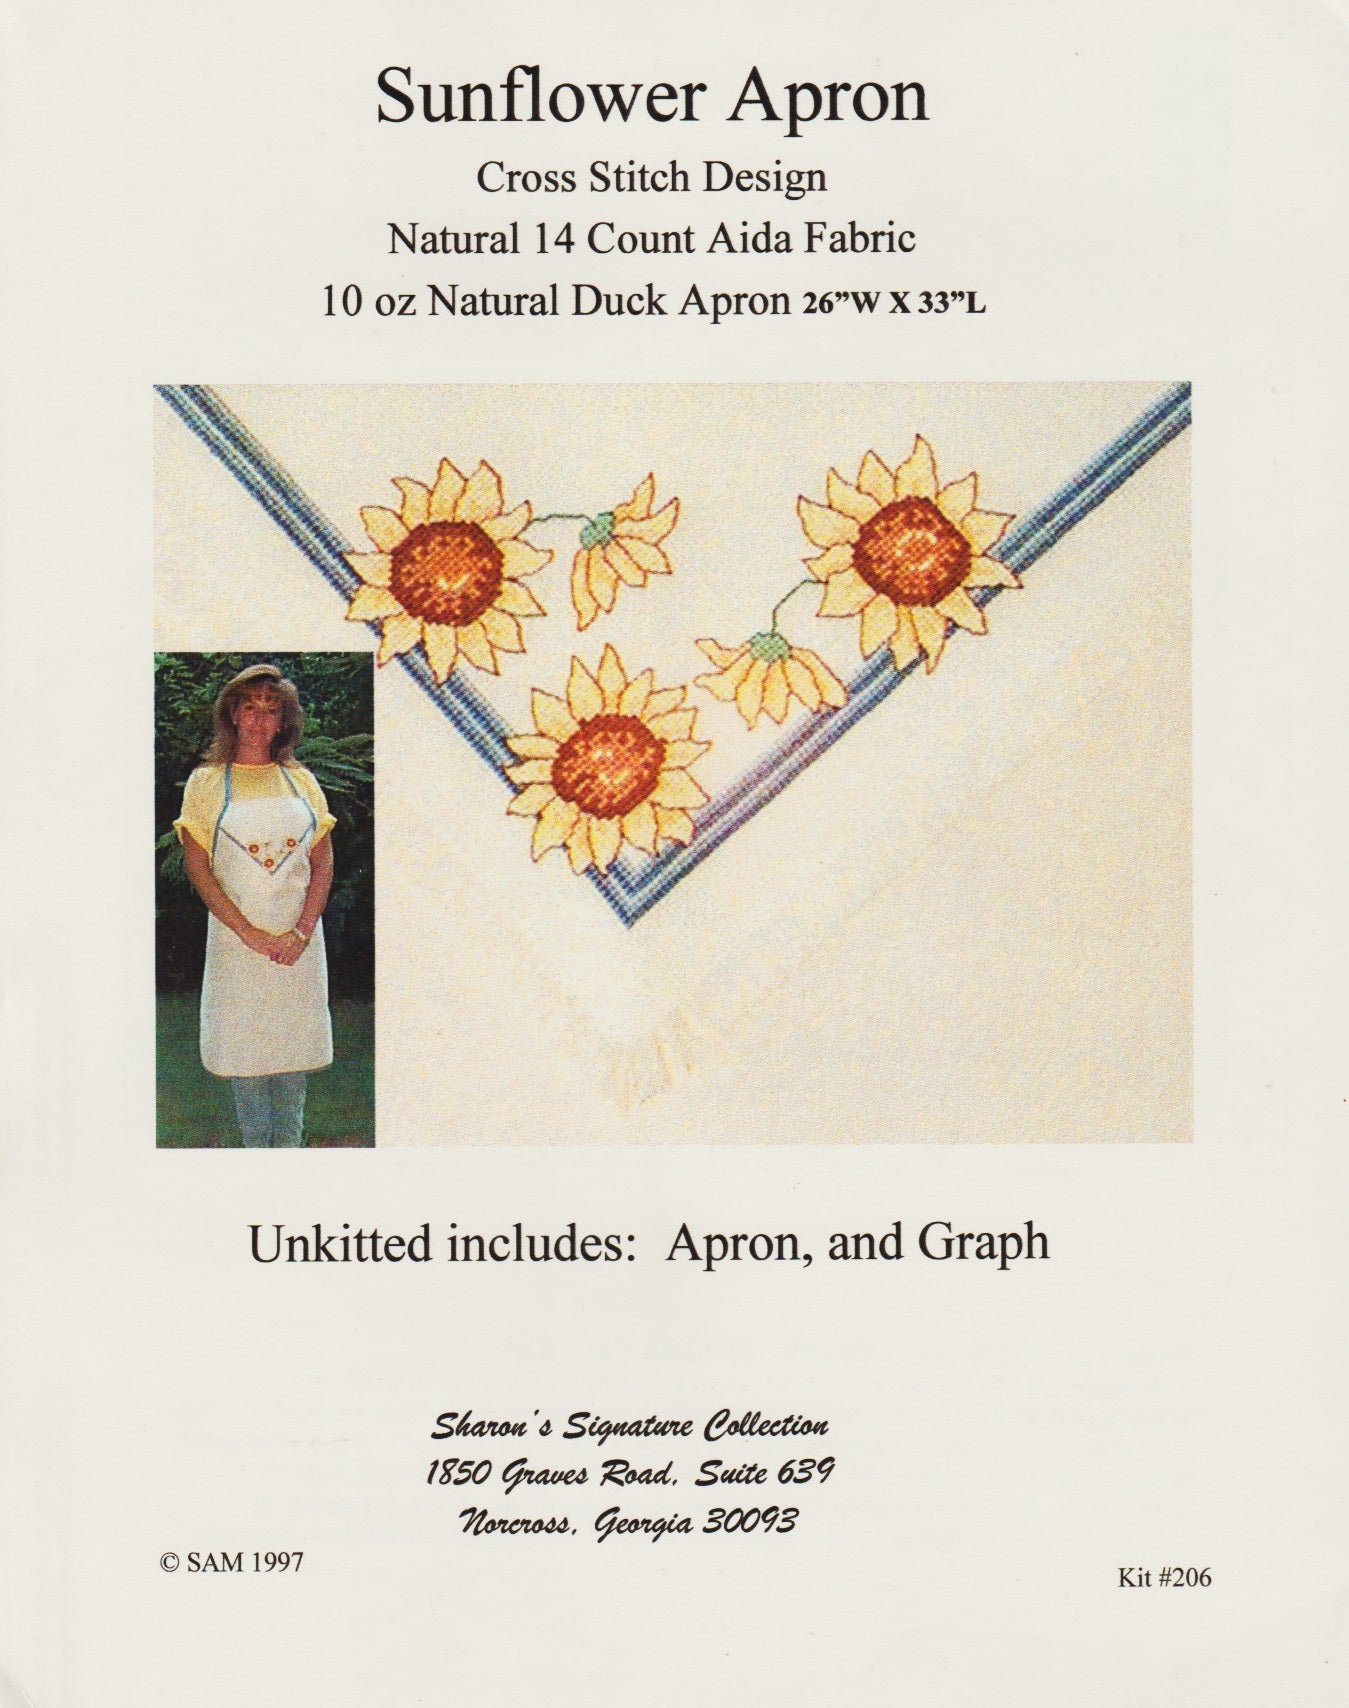 Sharon's Signature Collection Sunflower Apron 206 cross stitch kit